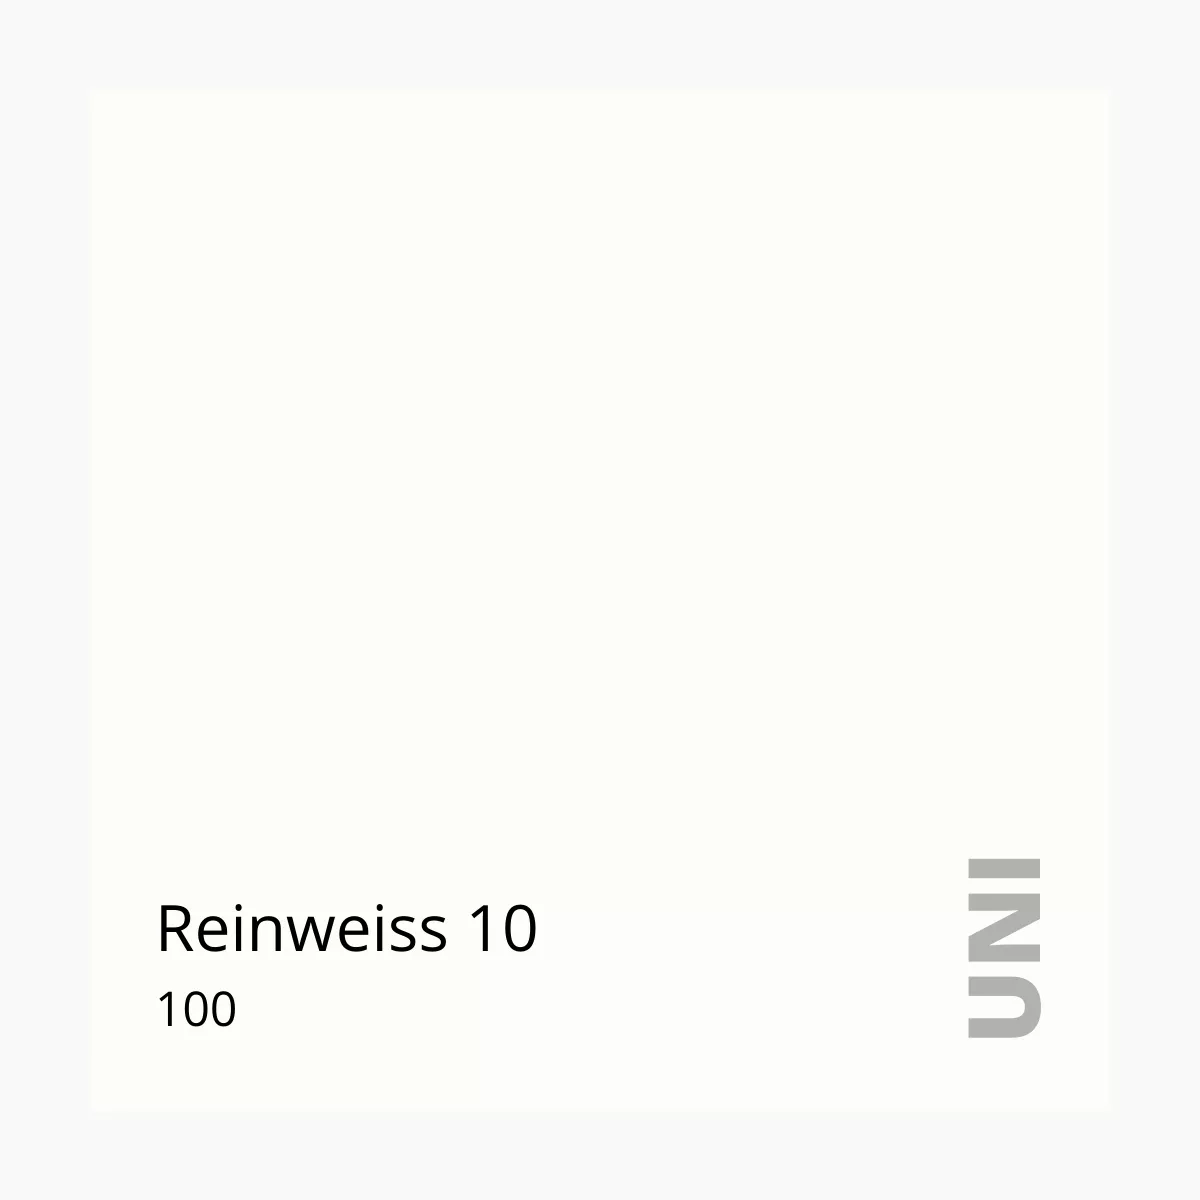 100 Reinweiss 10